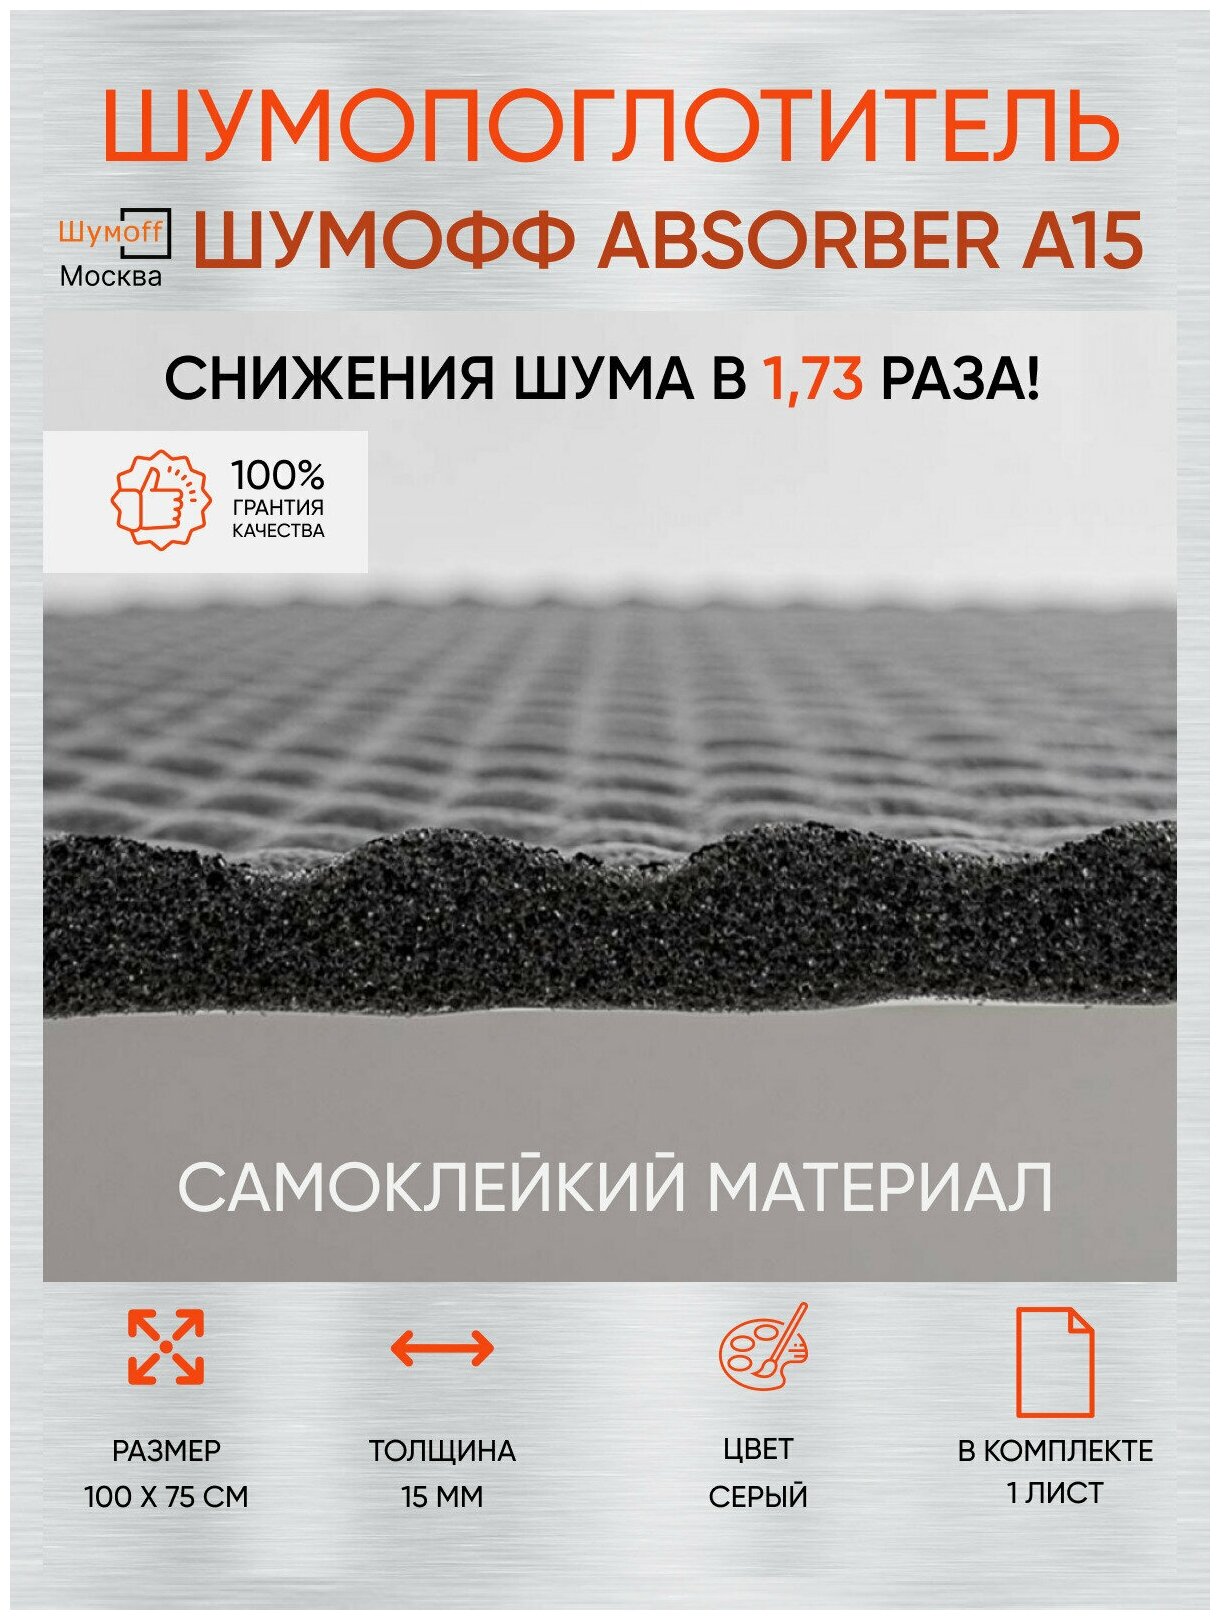 Шумоизоляция автомобиля Шумофф Absorber A15 - 1 лист 75х100 см виброизоляция для авто звукоизоляция машины звукоизоляционный материал